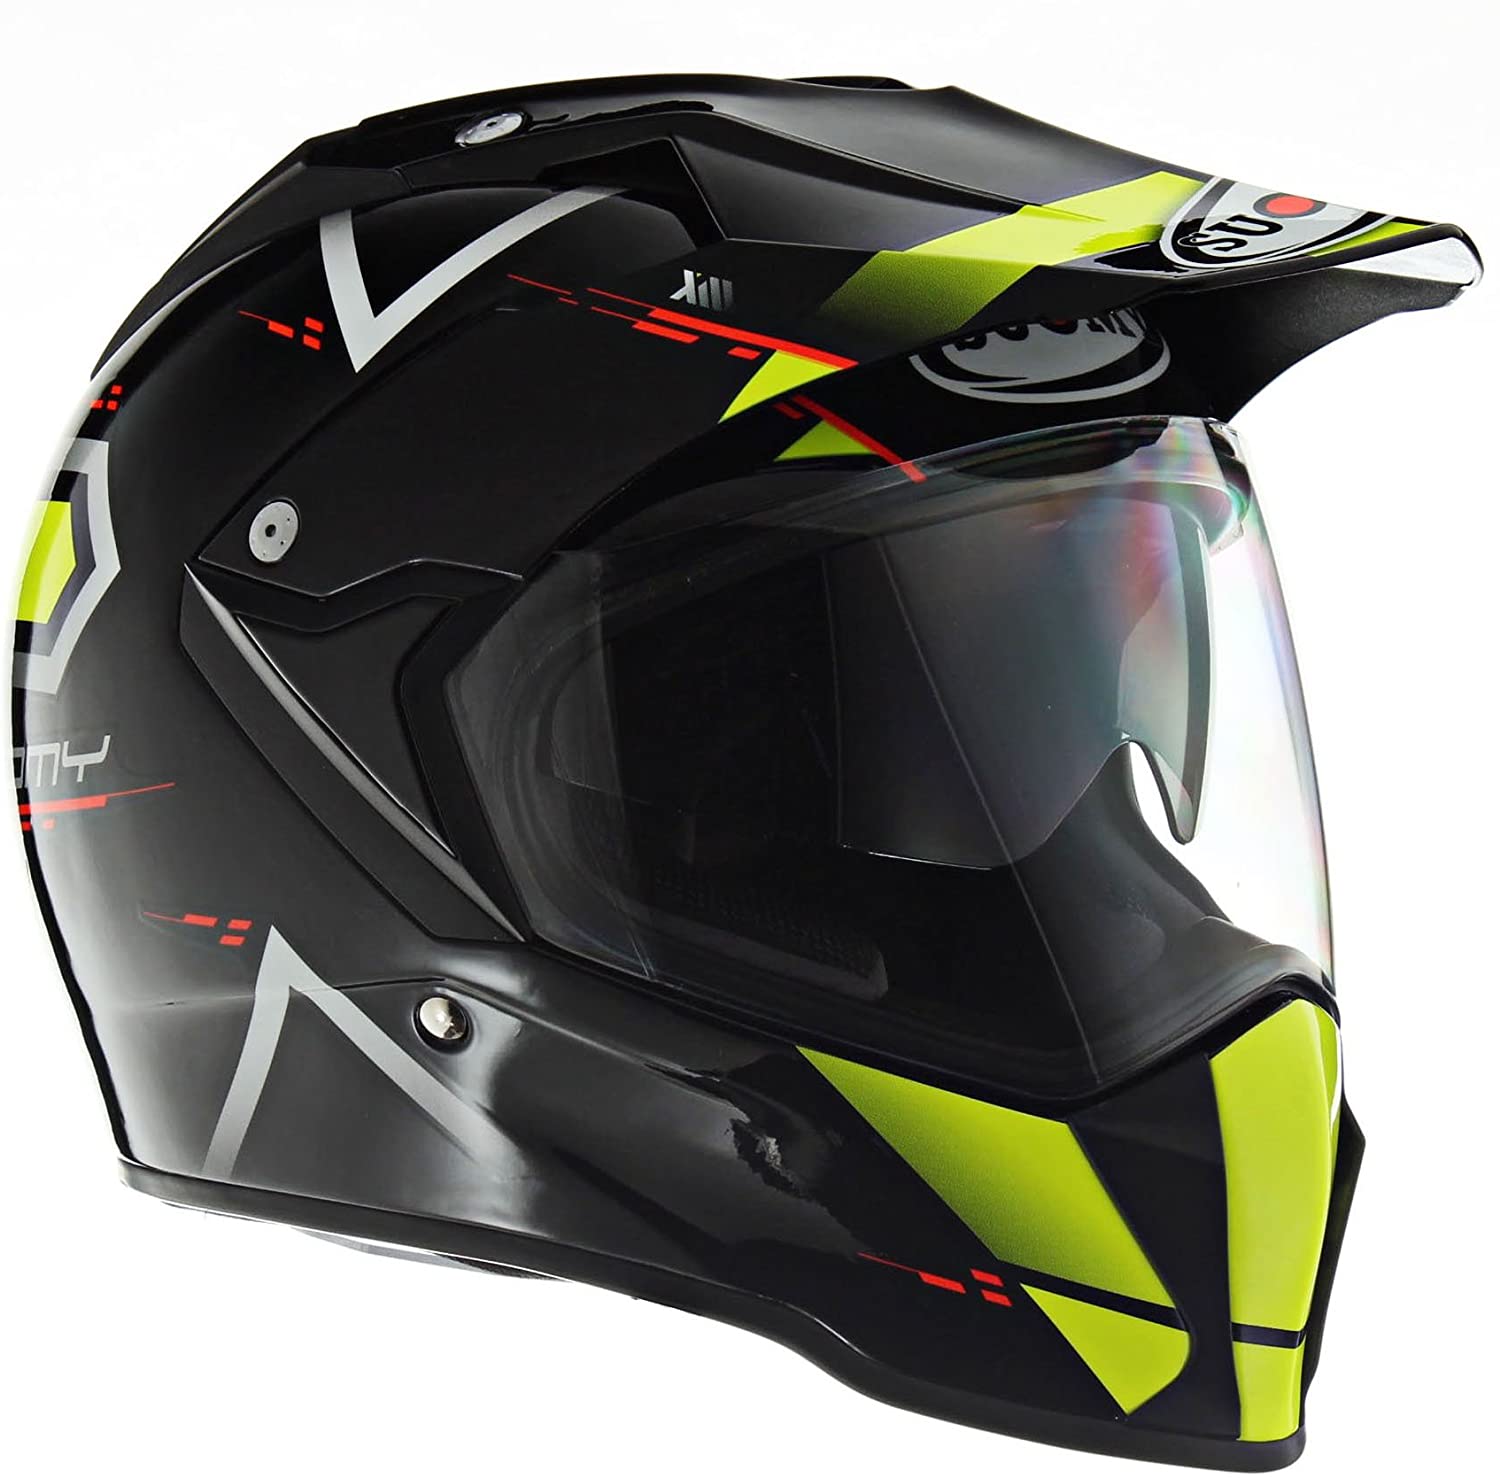 Suomy MX Tourer Road Dual Sport Motorcycle Helmet (XS - 2XL)